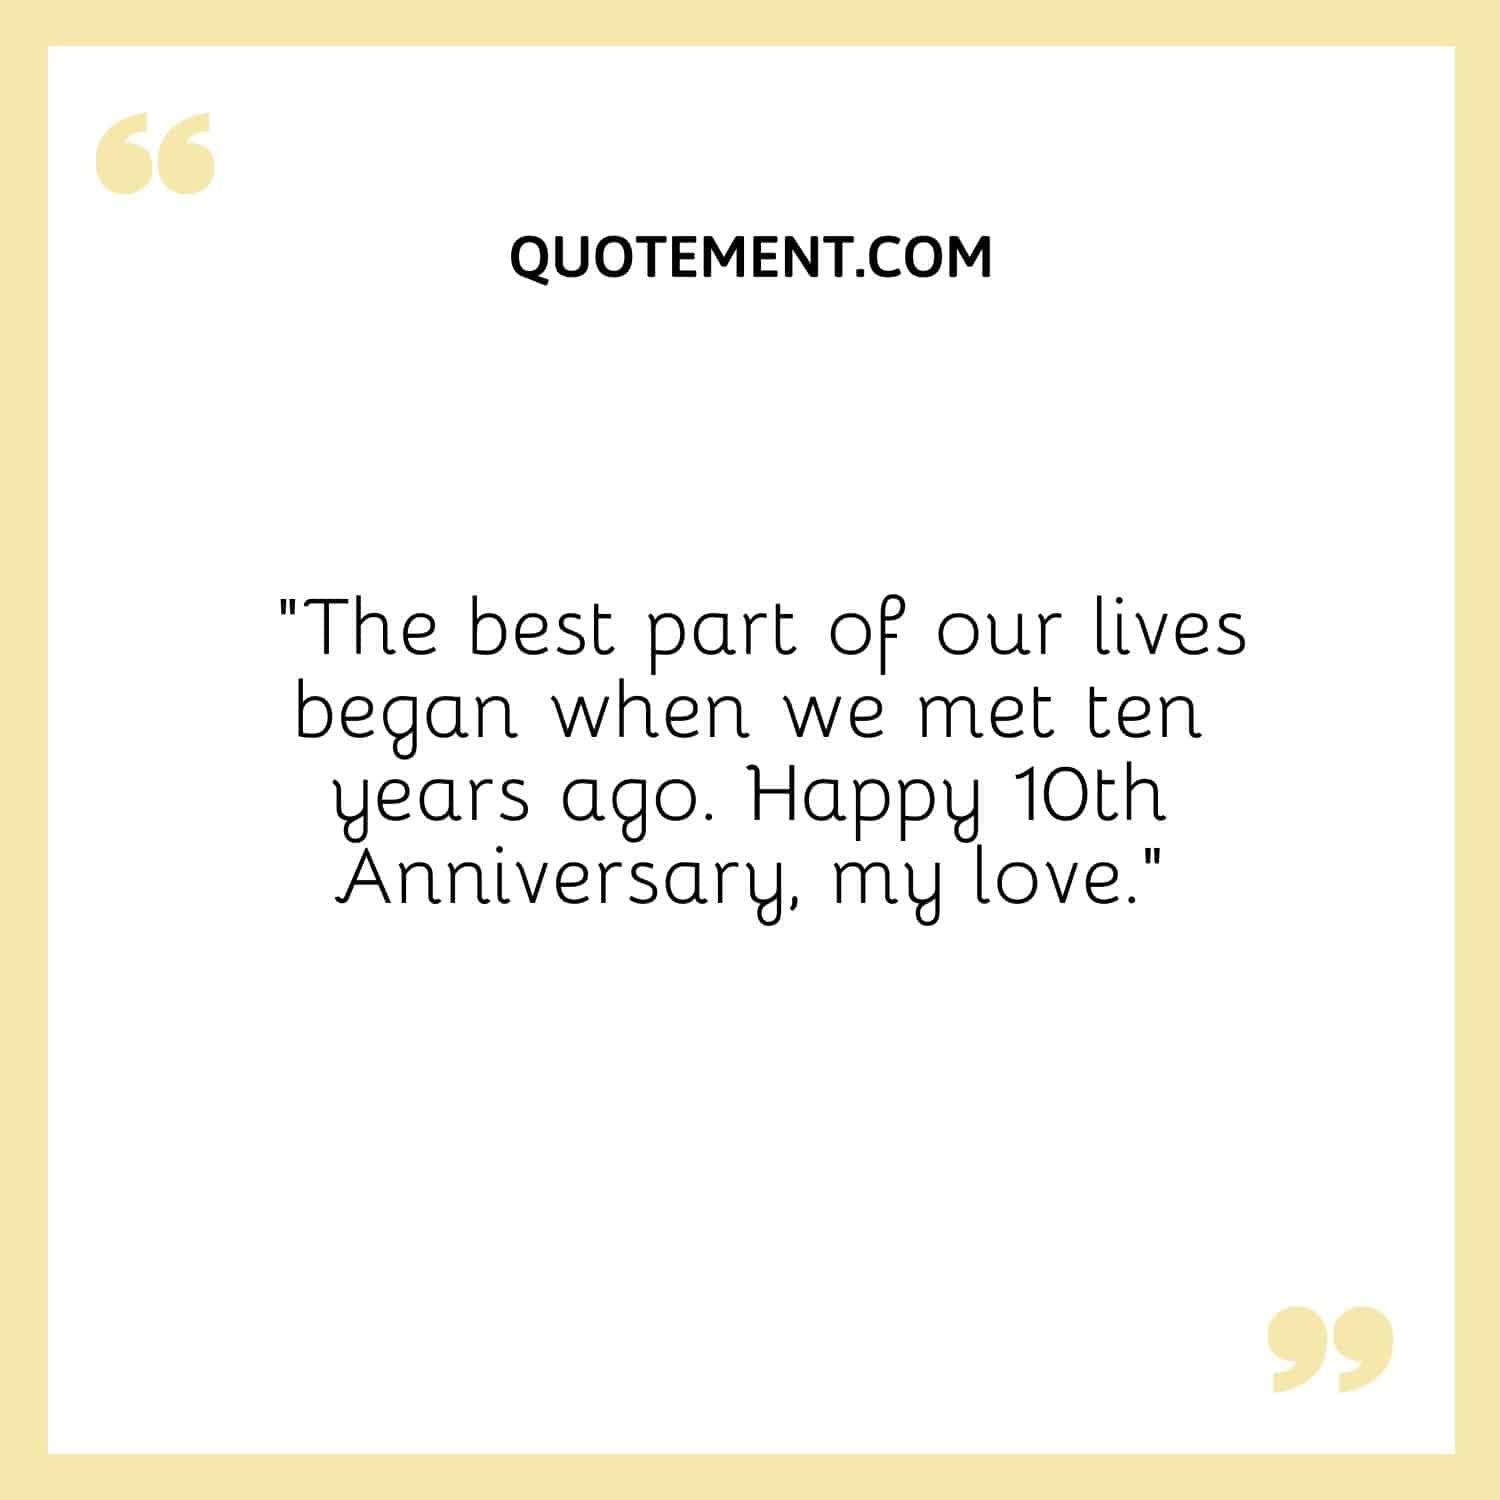 The best part of our lives began when we met ten years ago